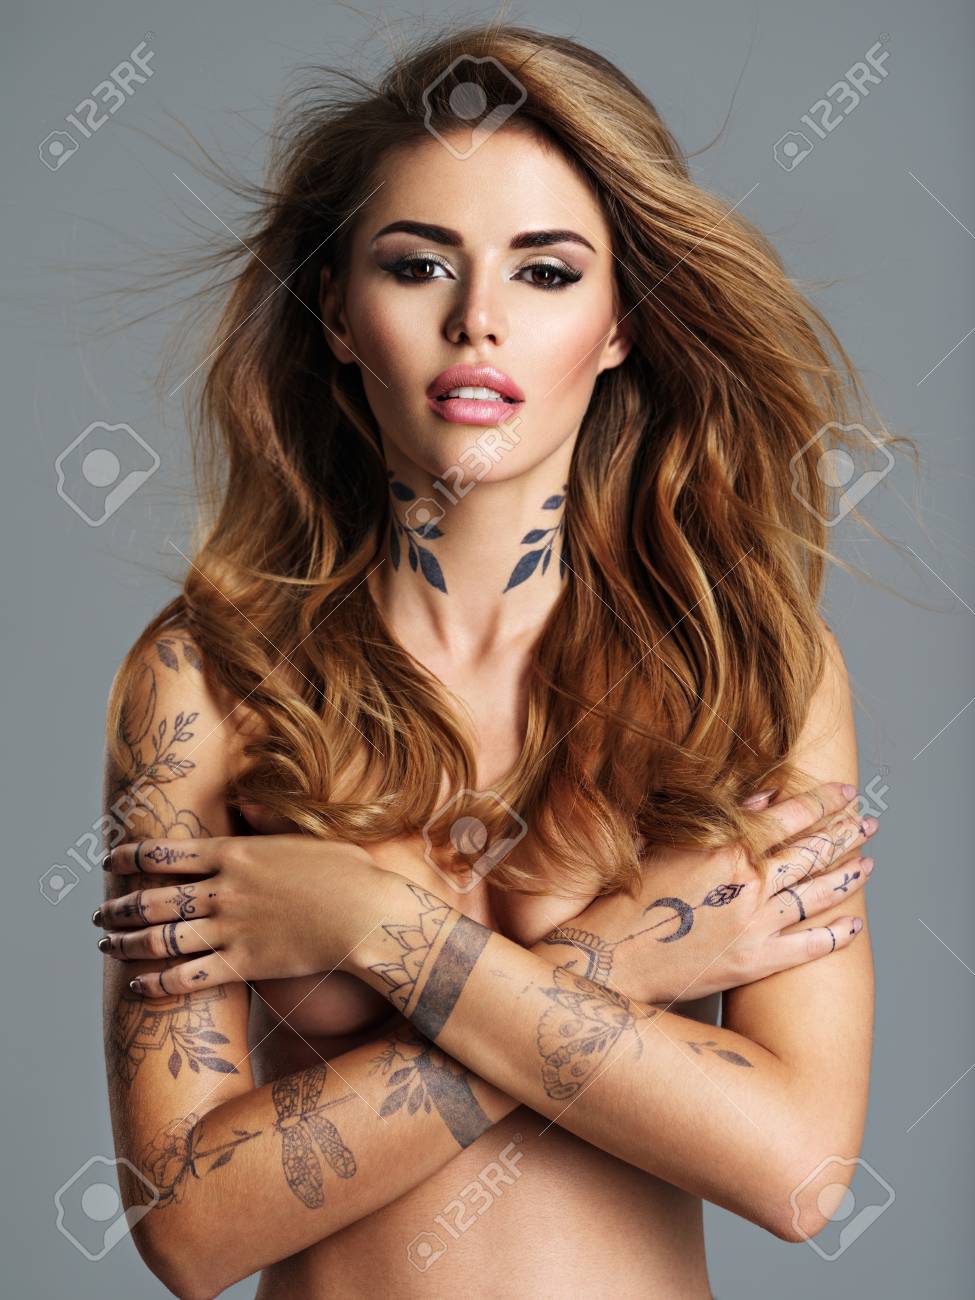 Sexy woman full body tattoos